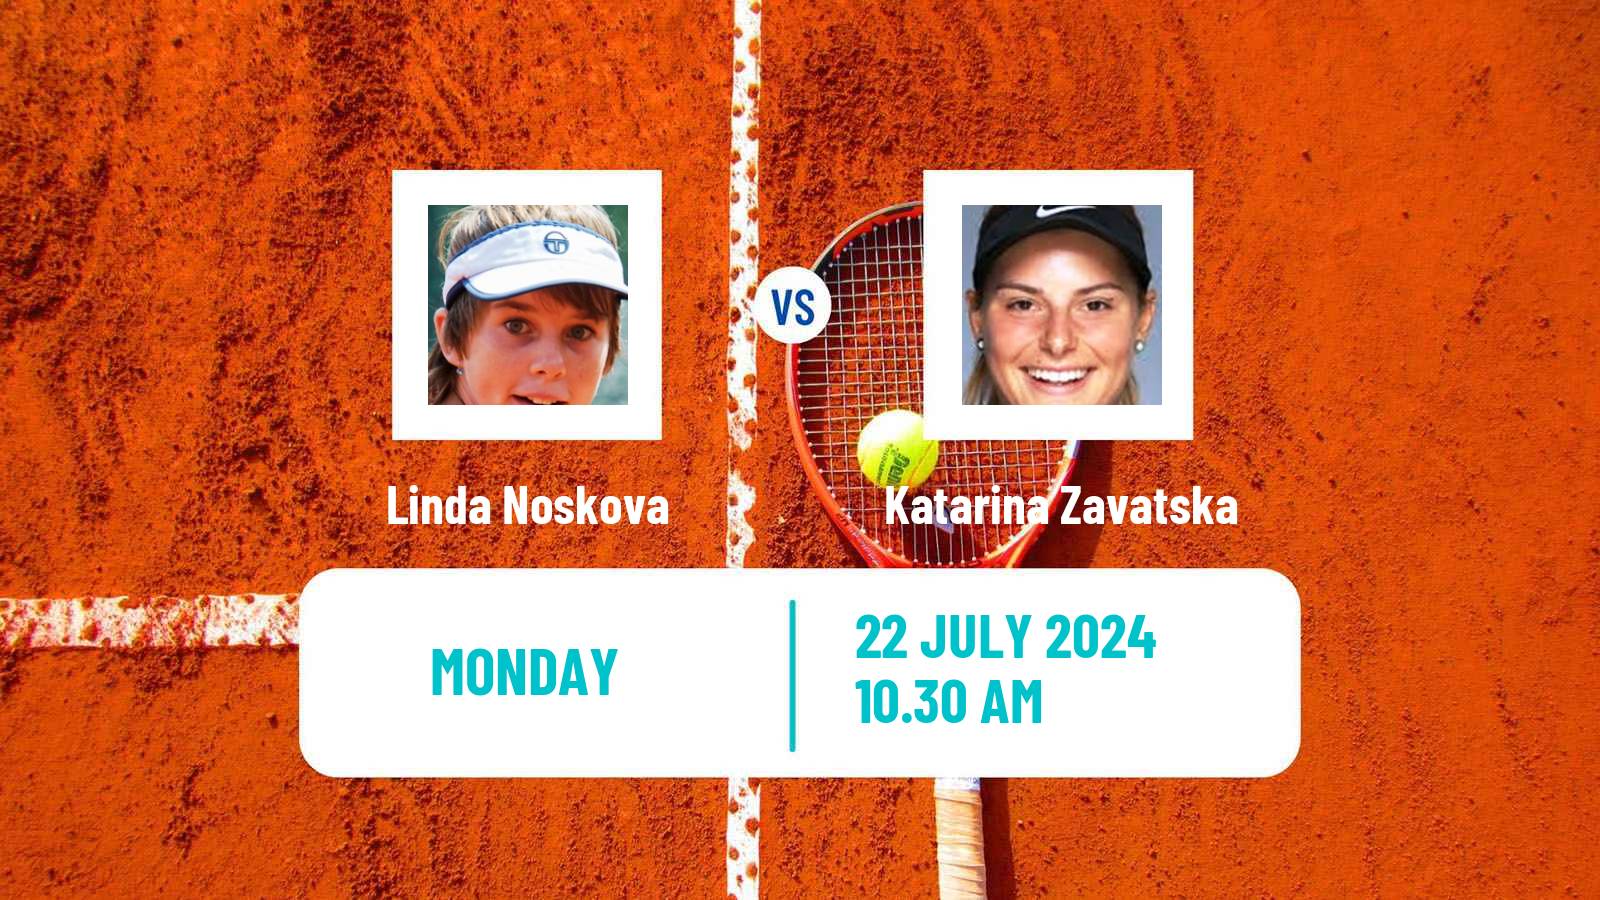 Tennis WTA Prague Linda Noskova - Katarina Zavatska